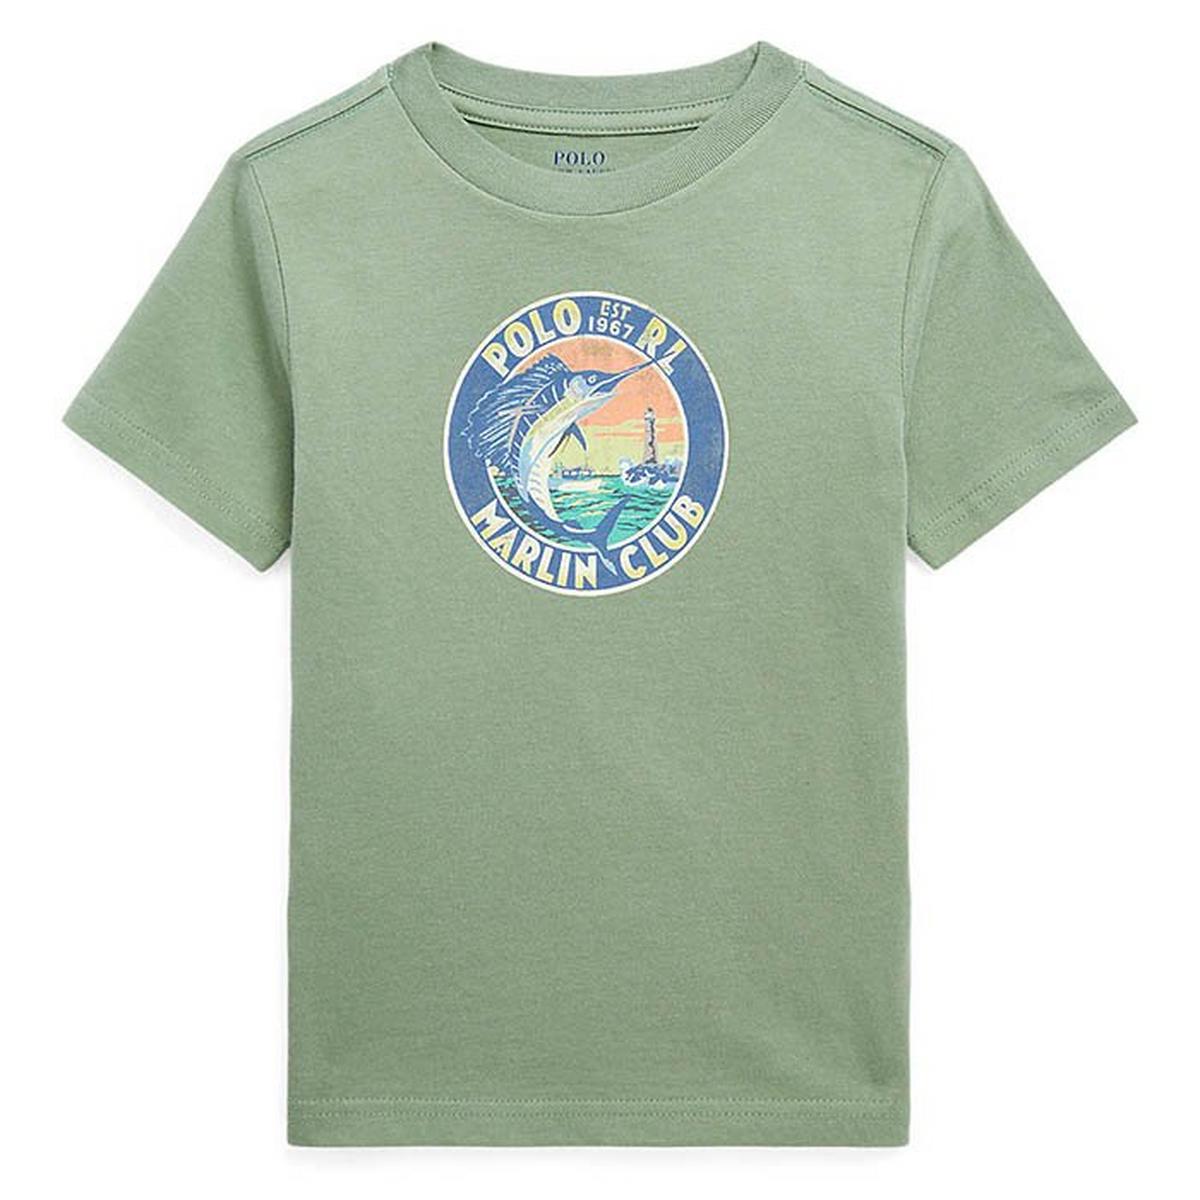 Boys' [2-4] Cotton Jersey Graphic T-Shirt